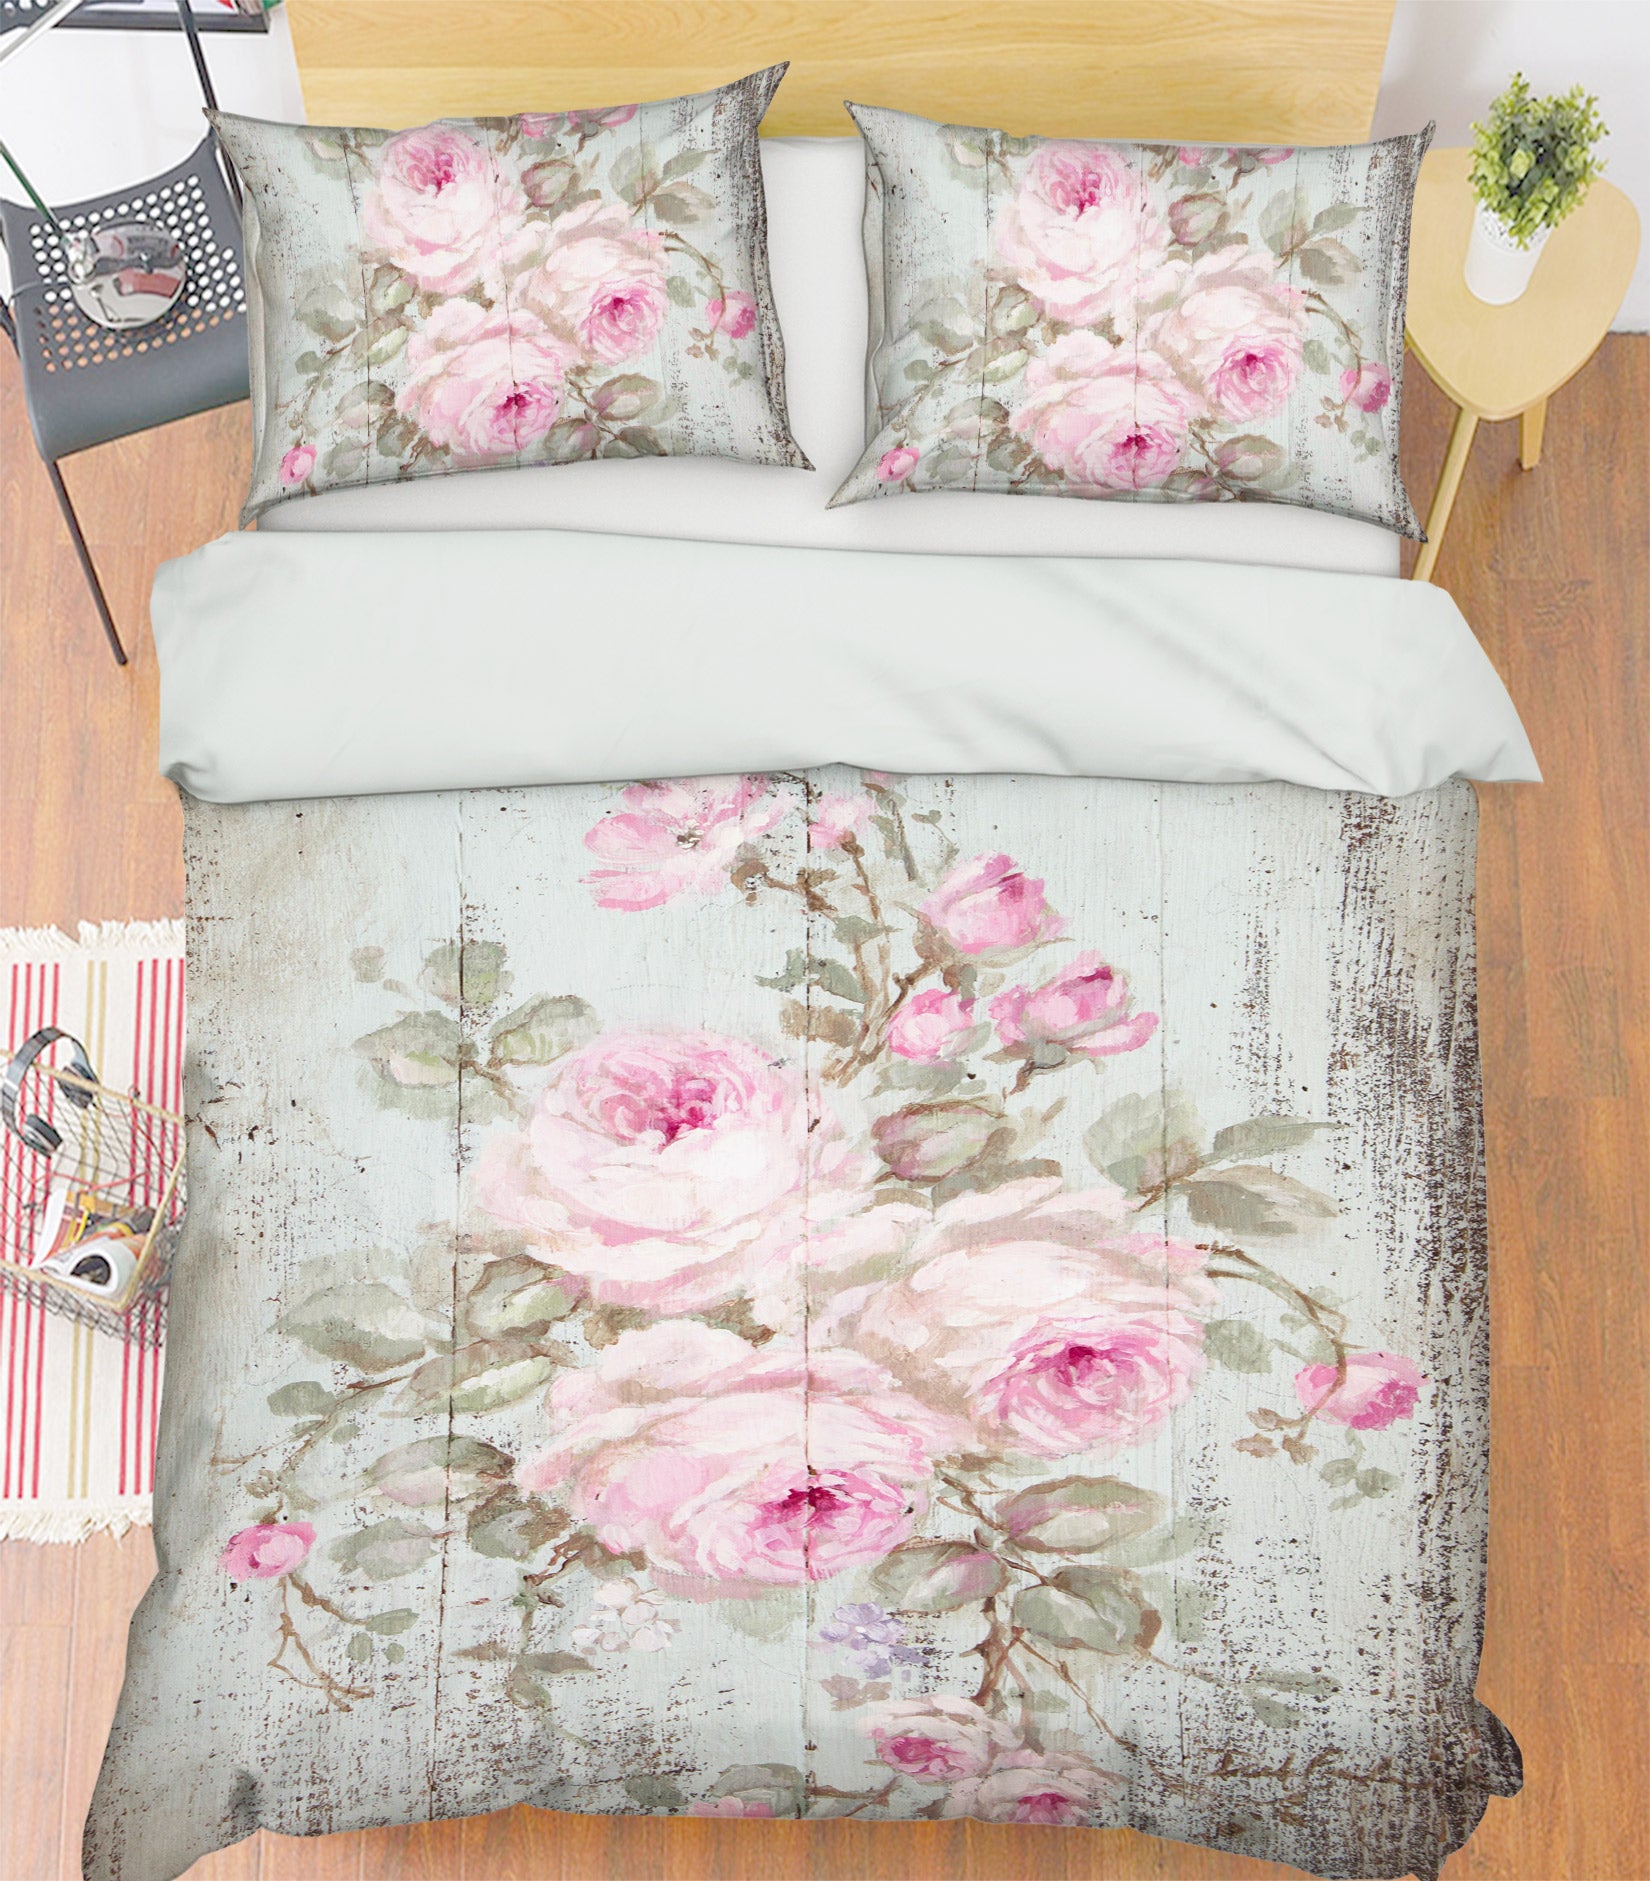 3D Light Pink Flower Bush 2106 Debi Coules Bedding Bed Pillowcases Quilt